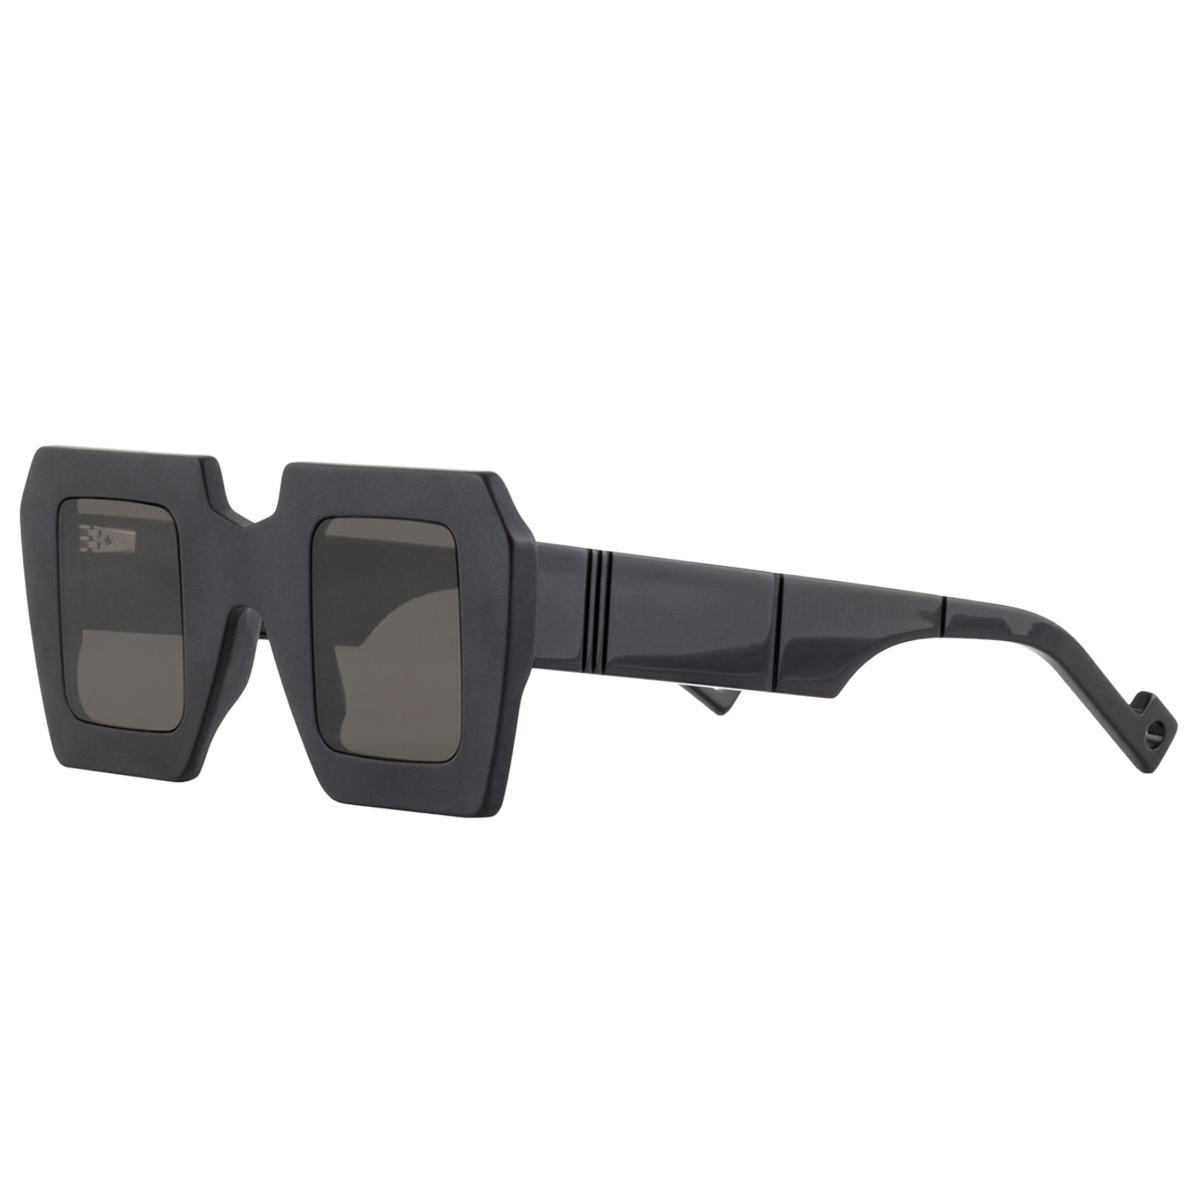 Pawaka TIGA 3 Sunglasses Matte Black - New collection 2018